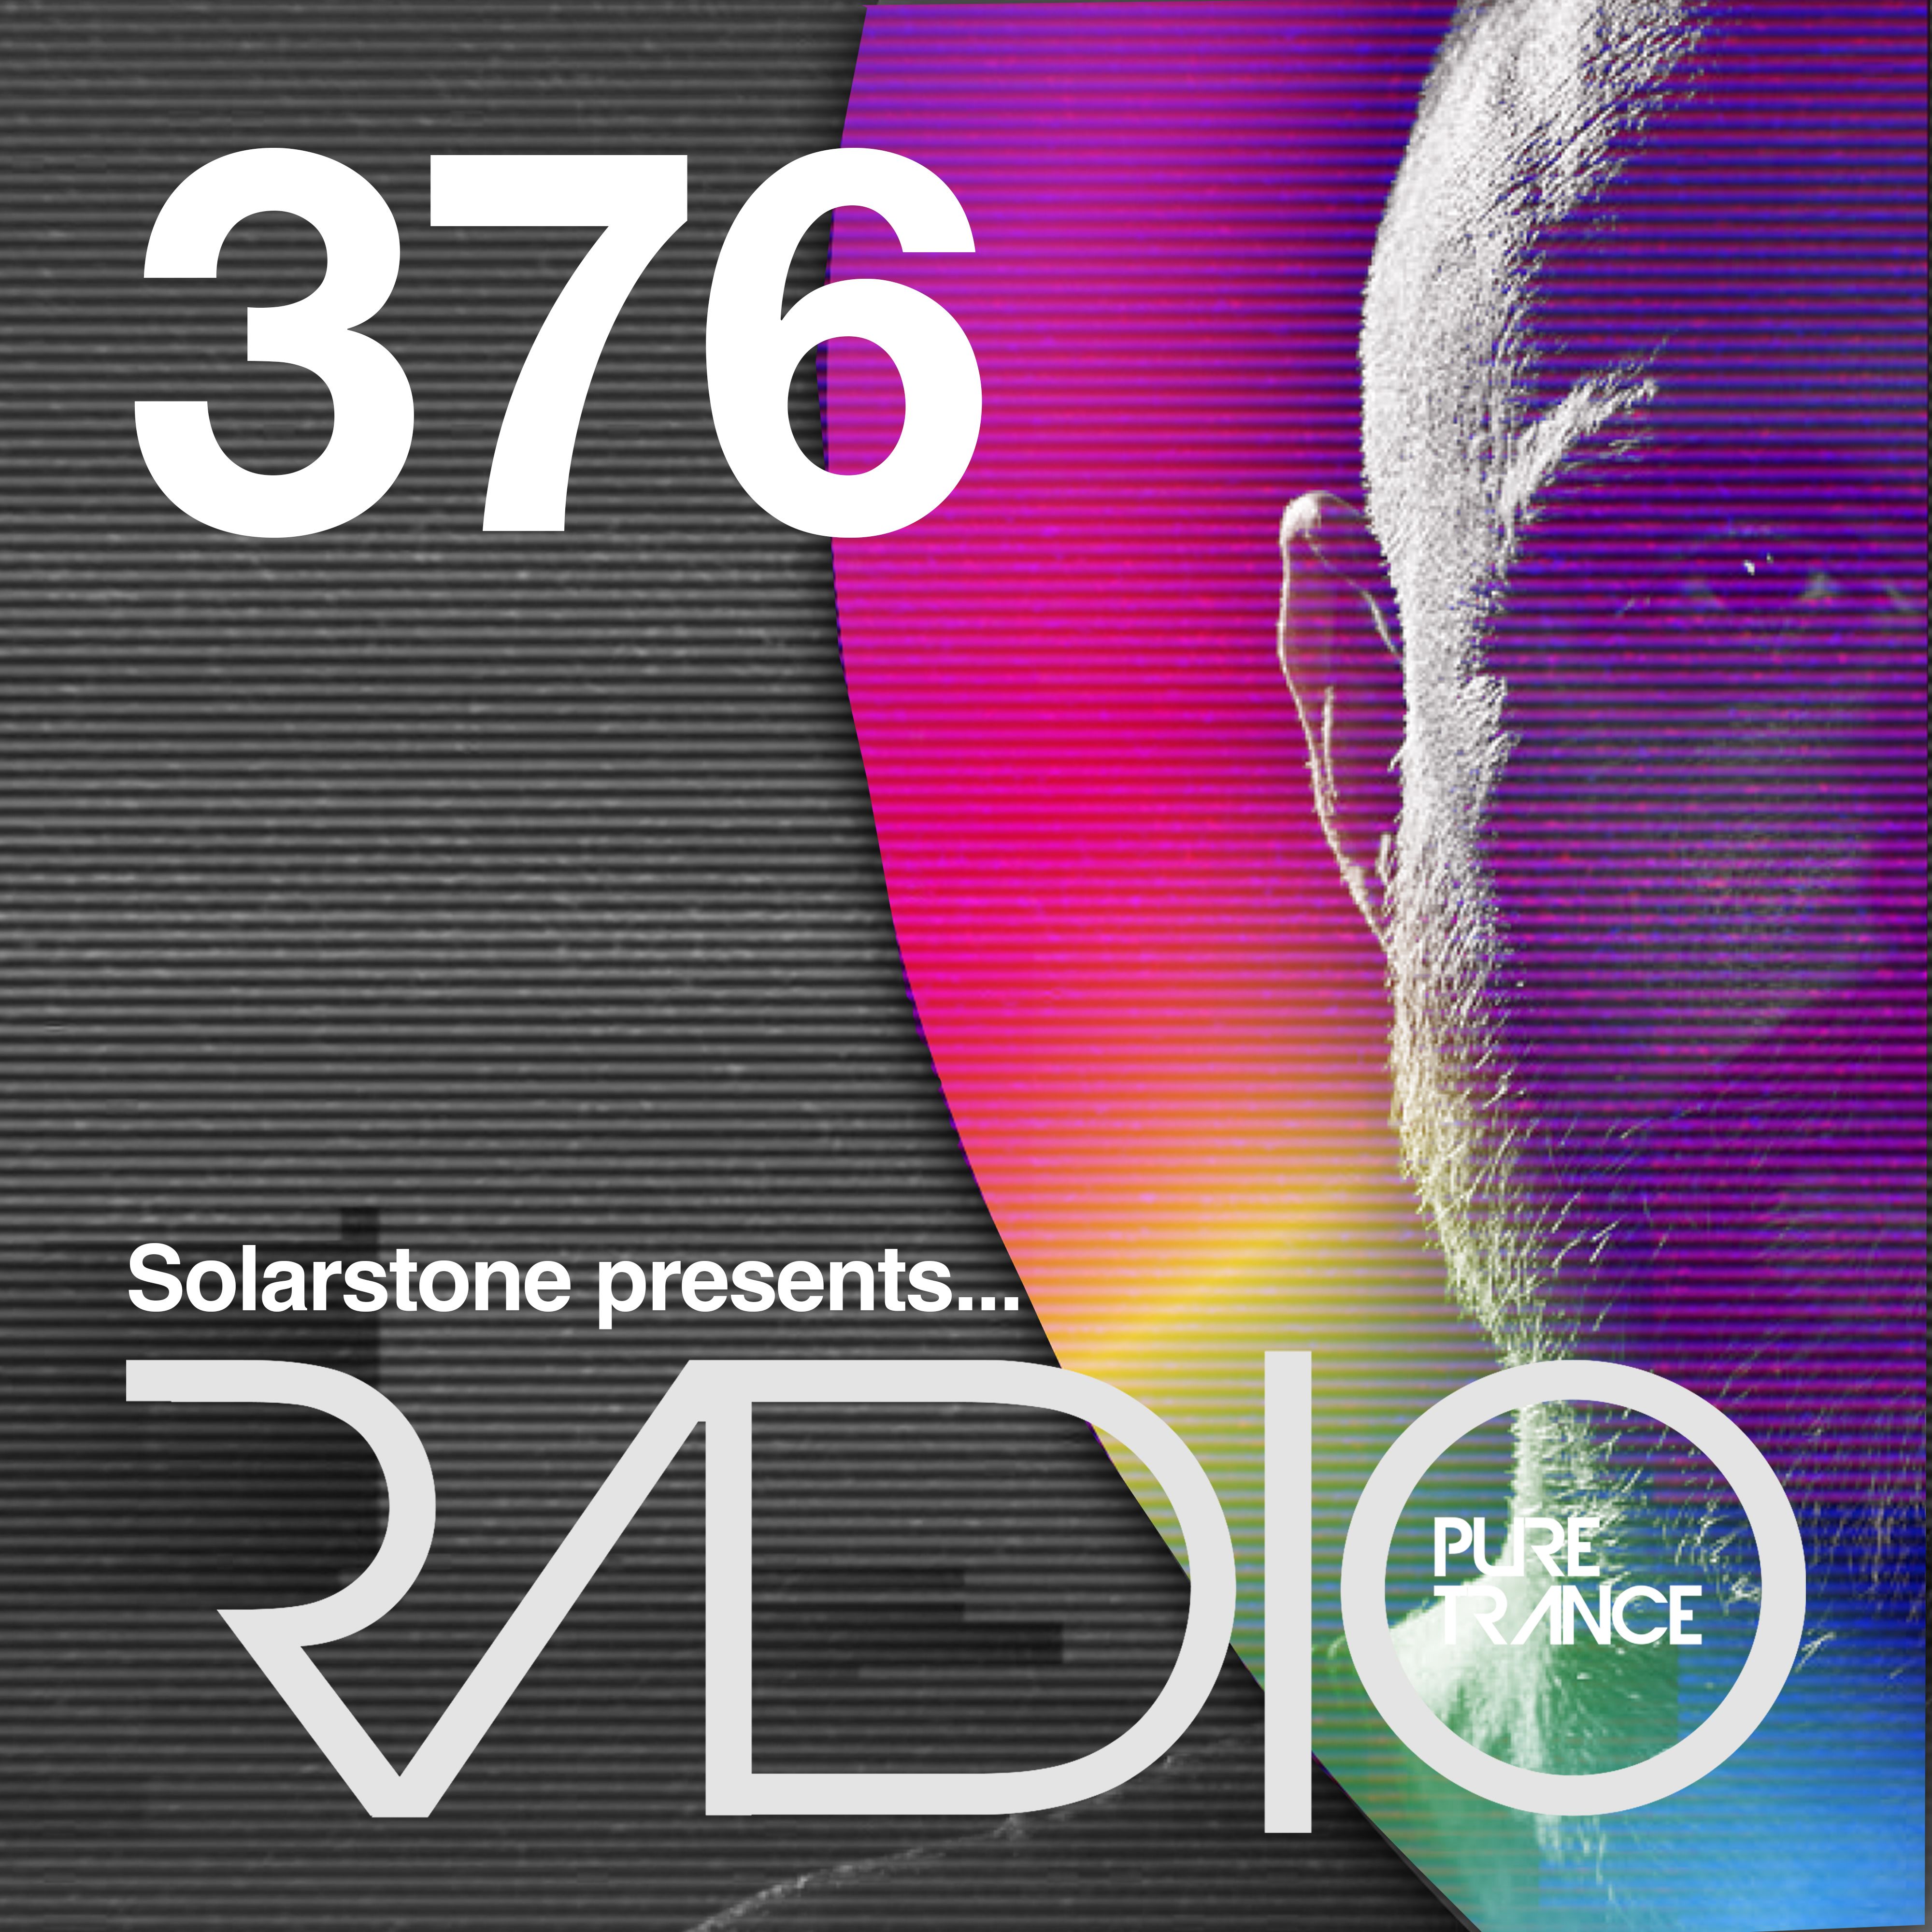 Solarstone presents Pure Trance Radio Episode 376